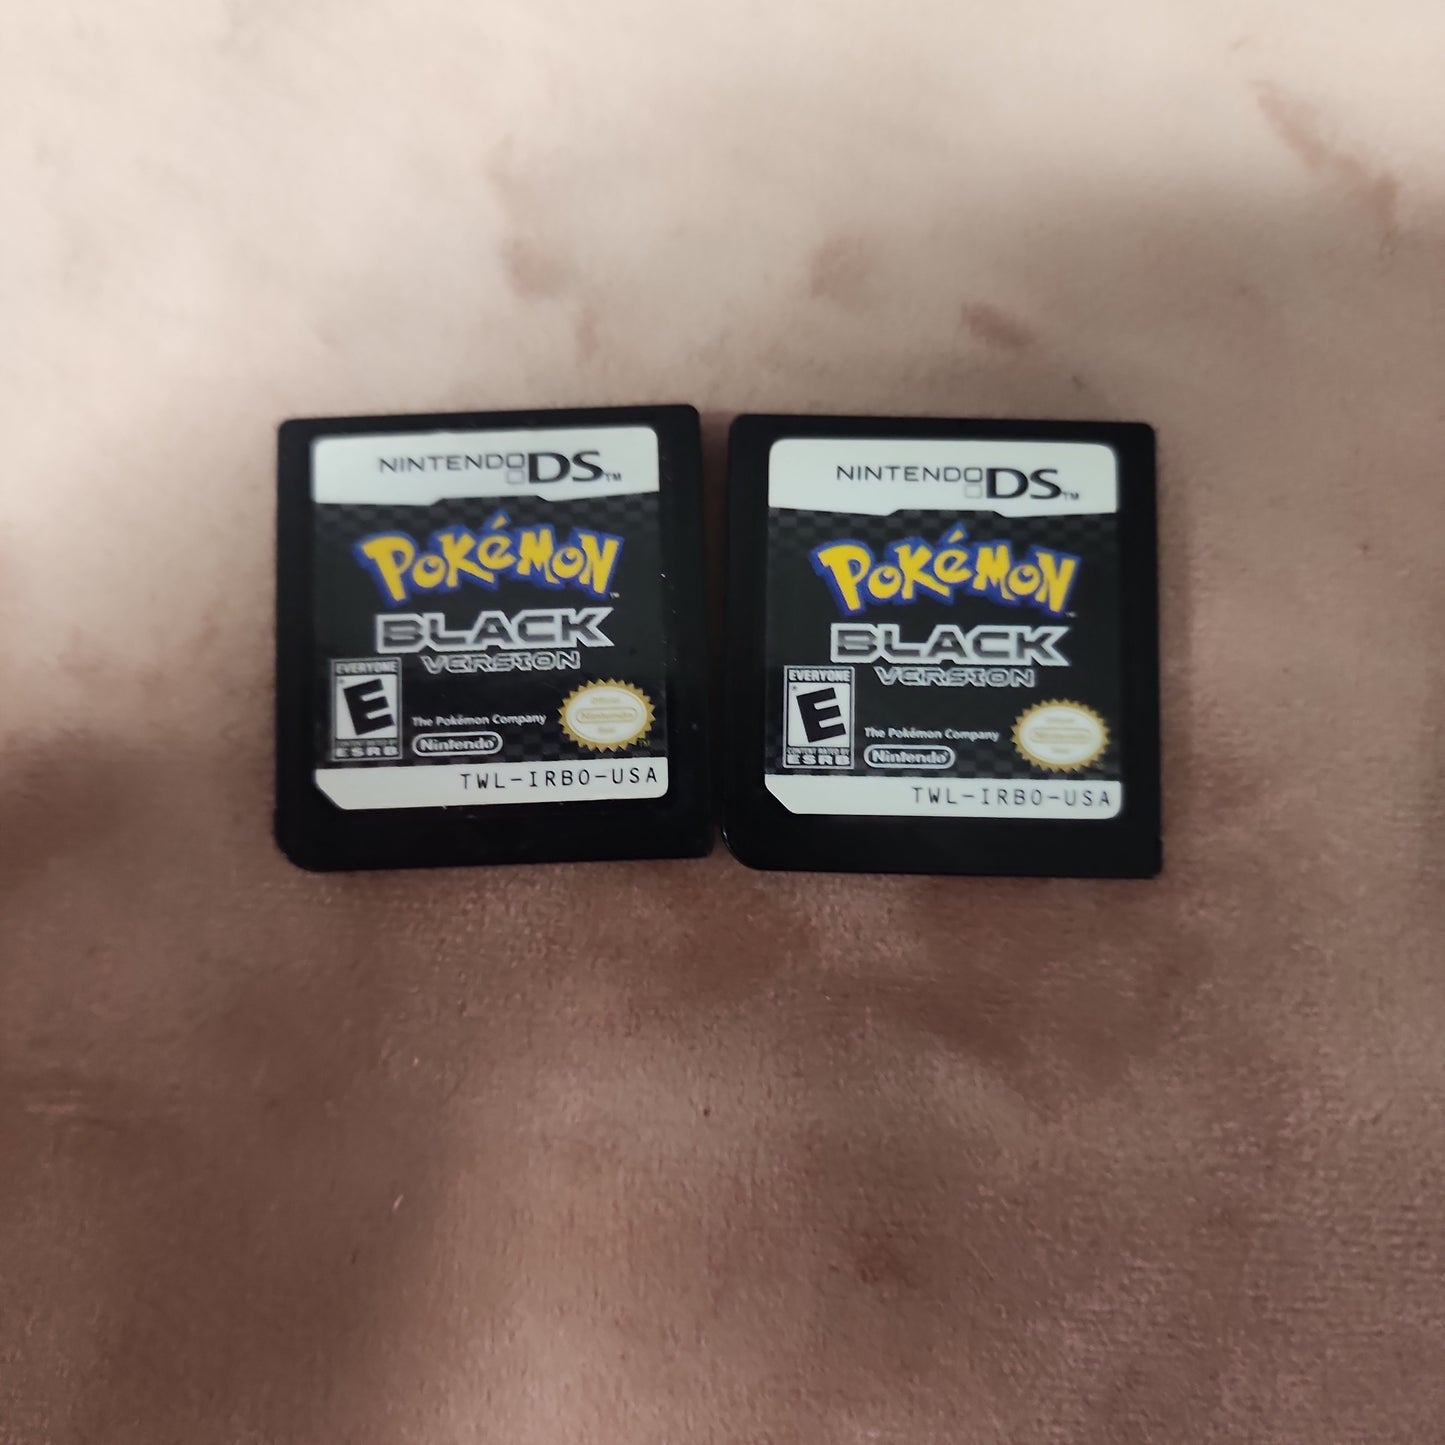 Pokémon Black Version - Nintendo DS (Game Only)